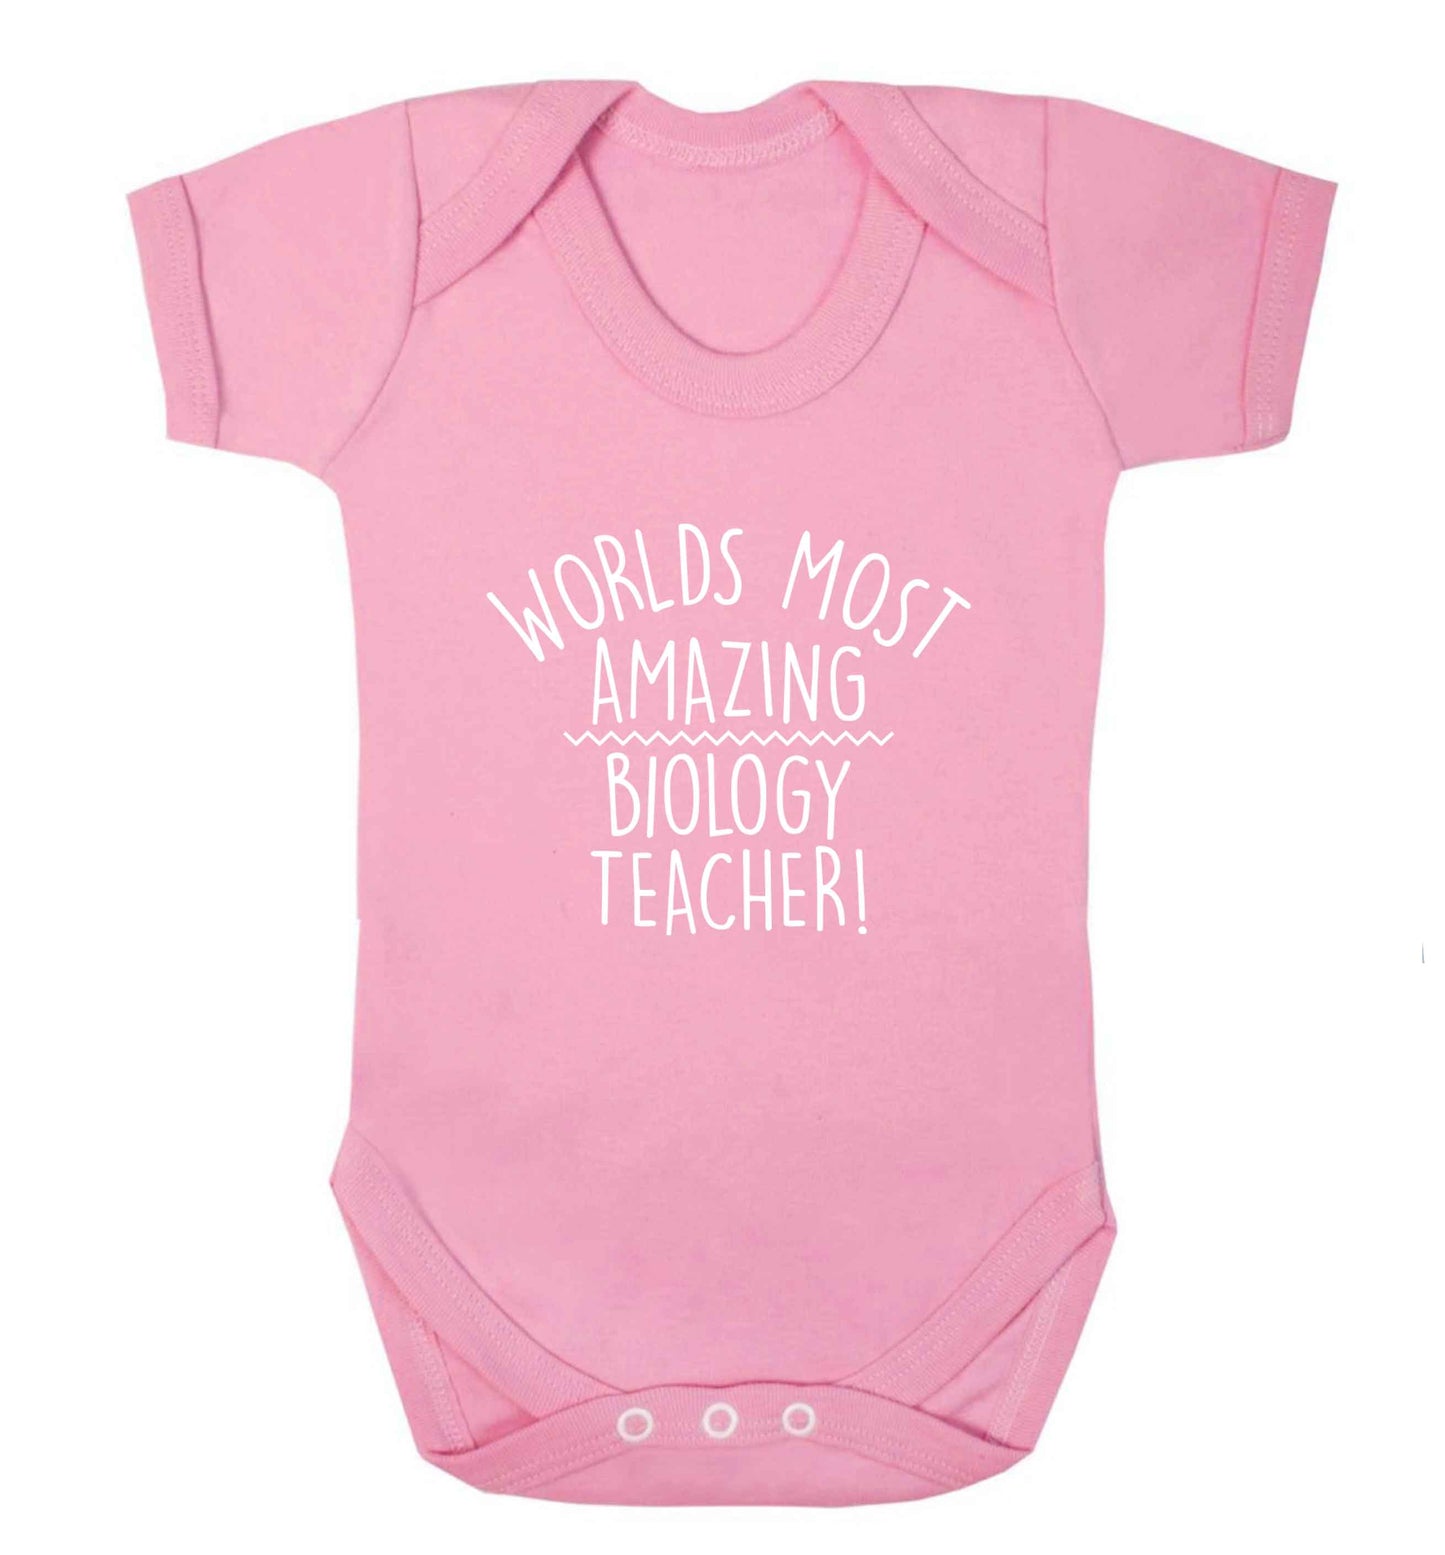 Worlds most amazing biology teacher baby vest pale pink 18-24 months